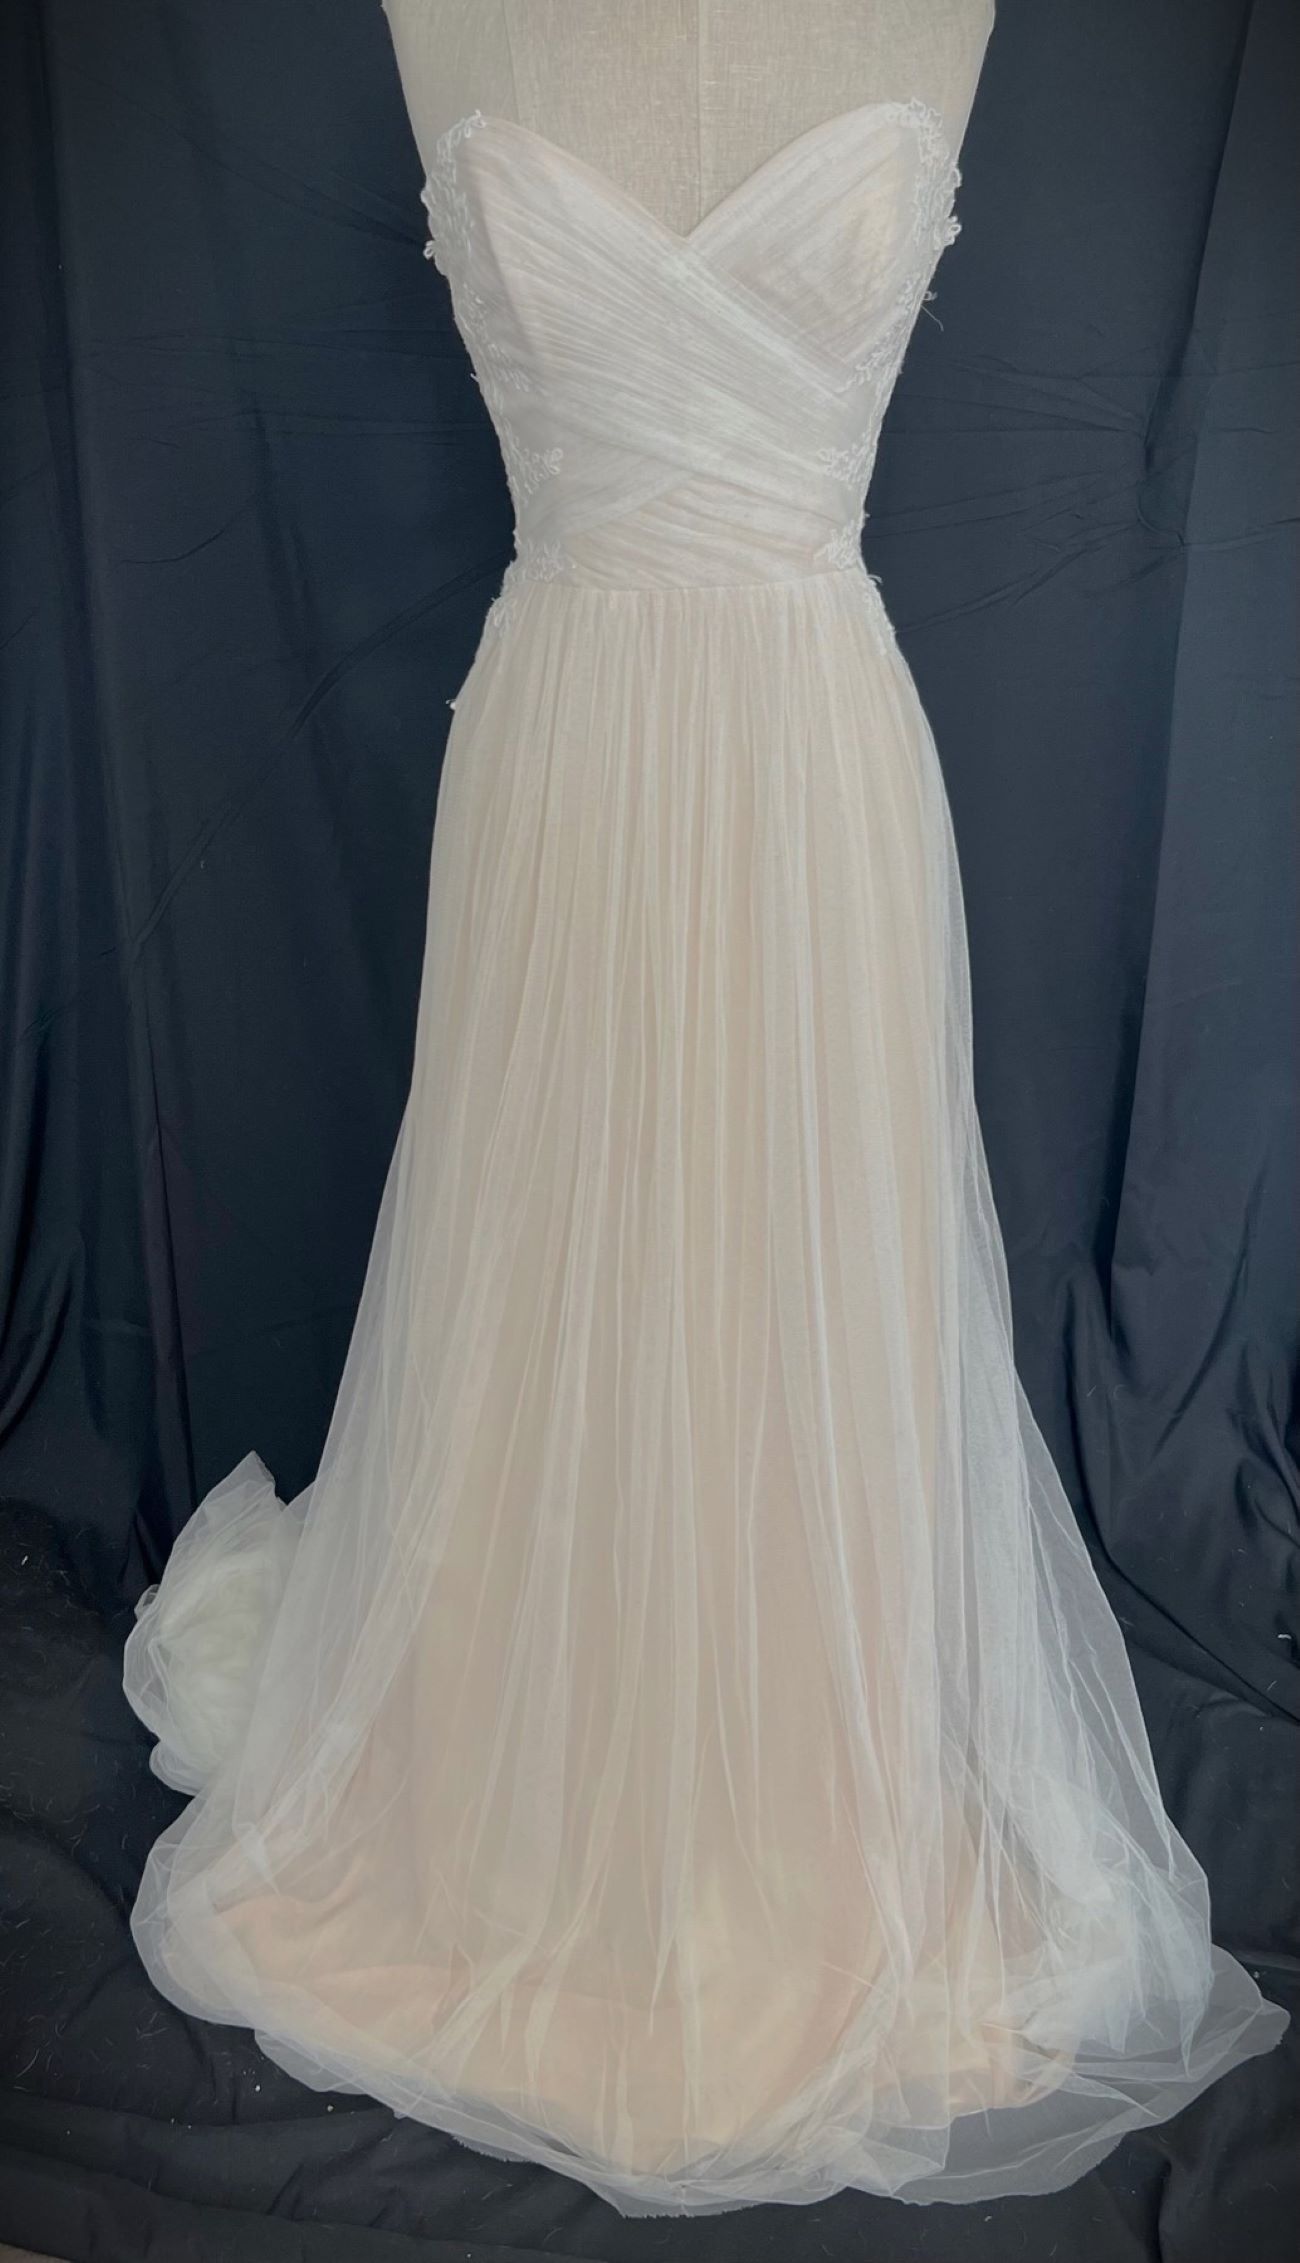 Maggie Sottero flowy wedding gown in size 12